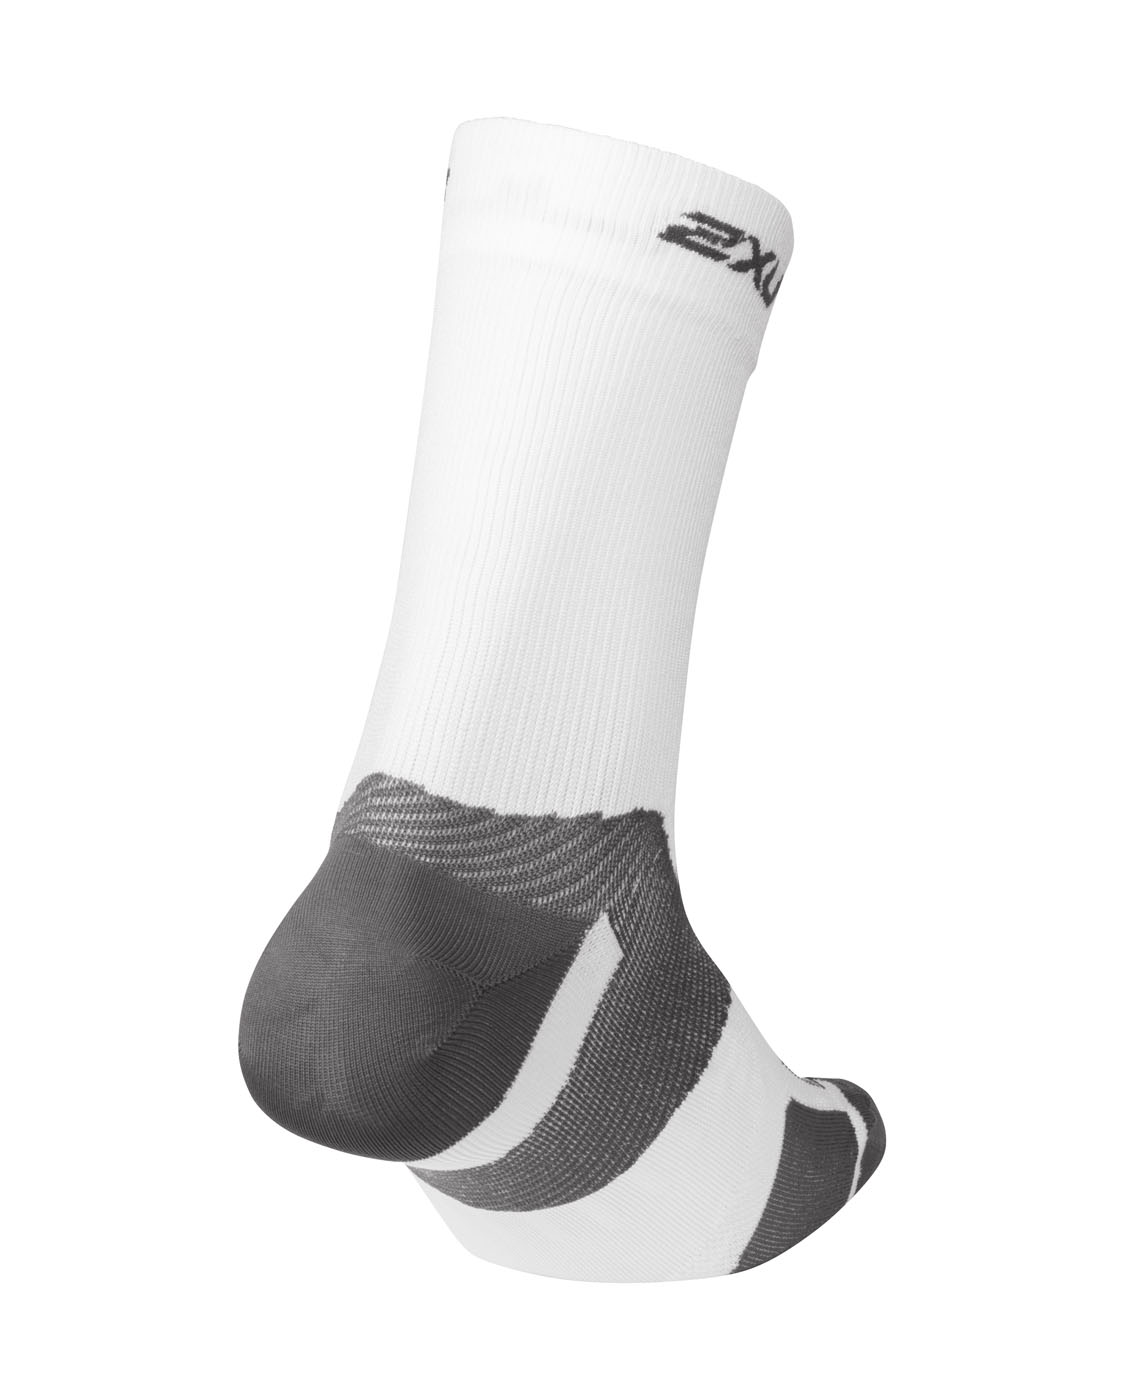 2XU Unisex Vectr Ultralight Crew Socks - White/Grey